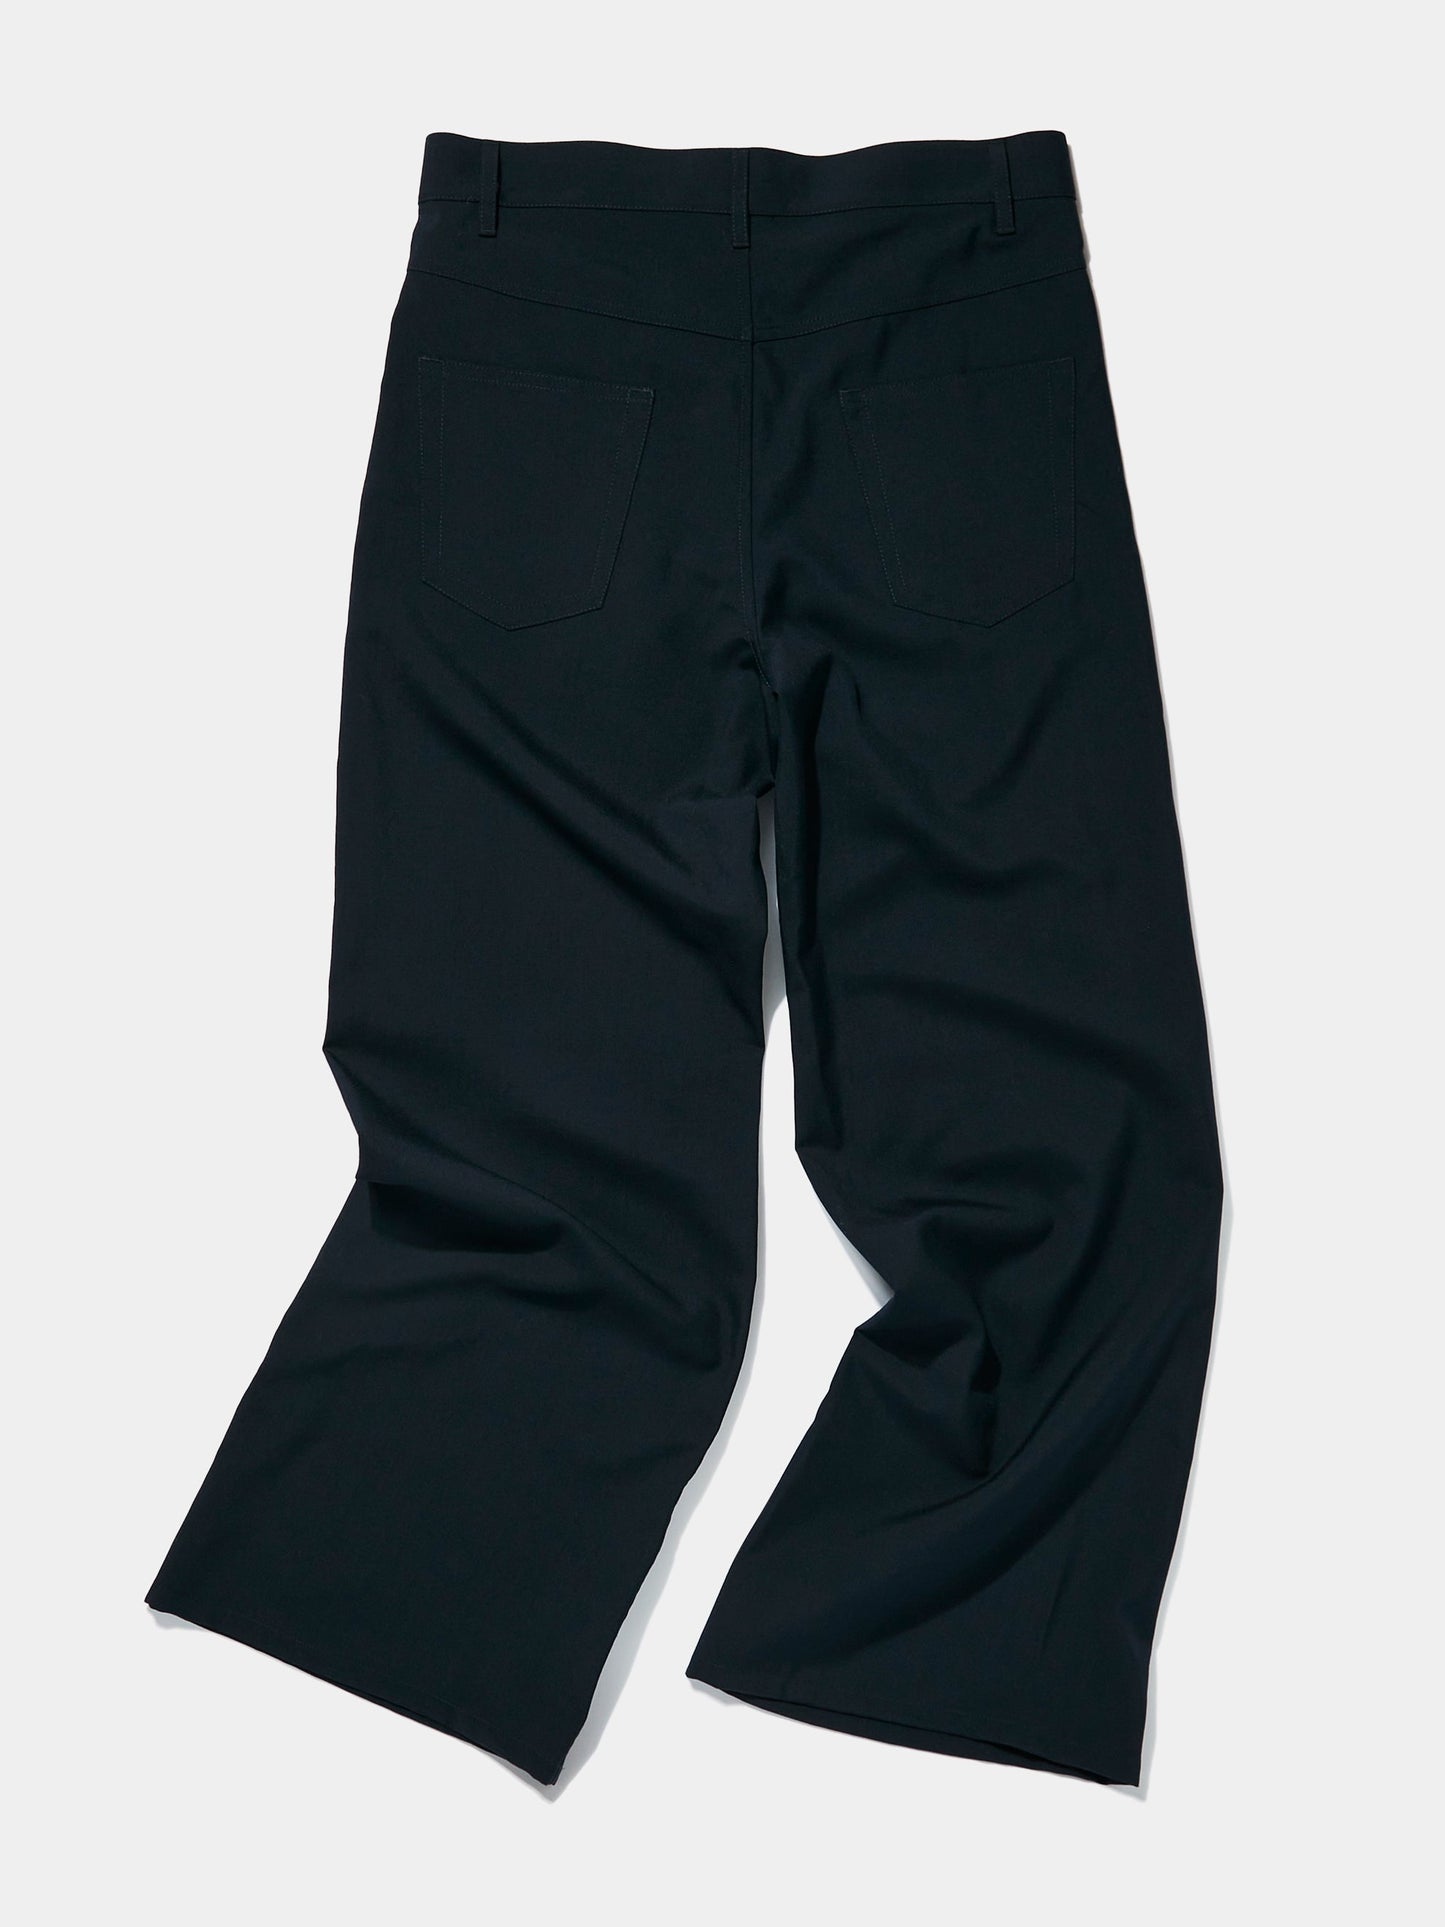 Trousers (Black)